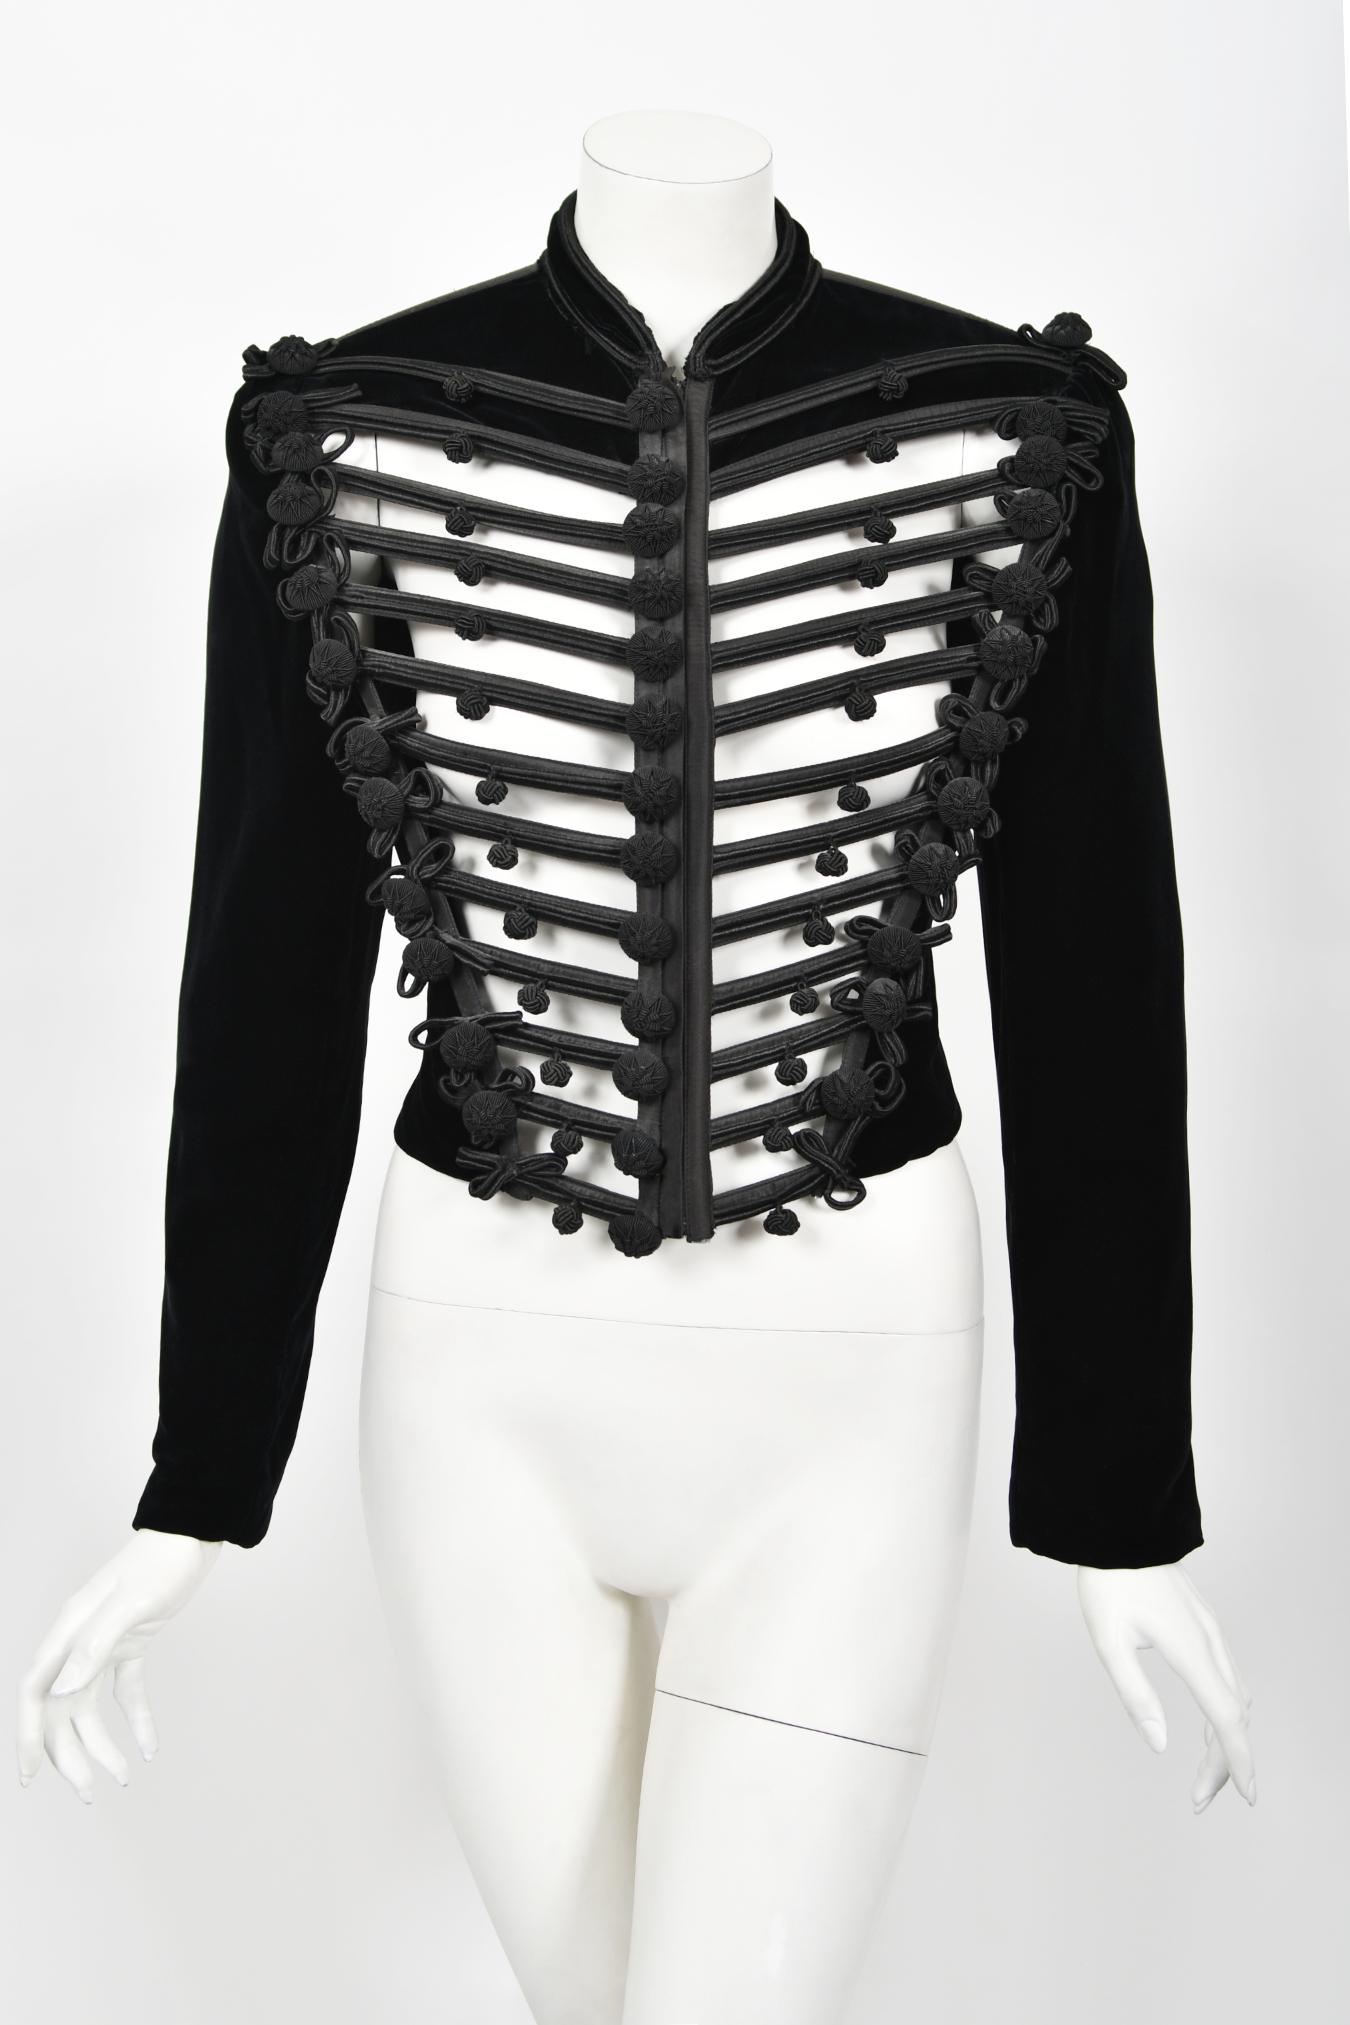 Women's 1991 Jean Paul Gaultier Documented Cher Worn Black Velvet Corset Cage Jacket  For Sale